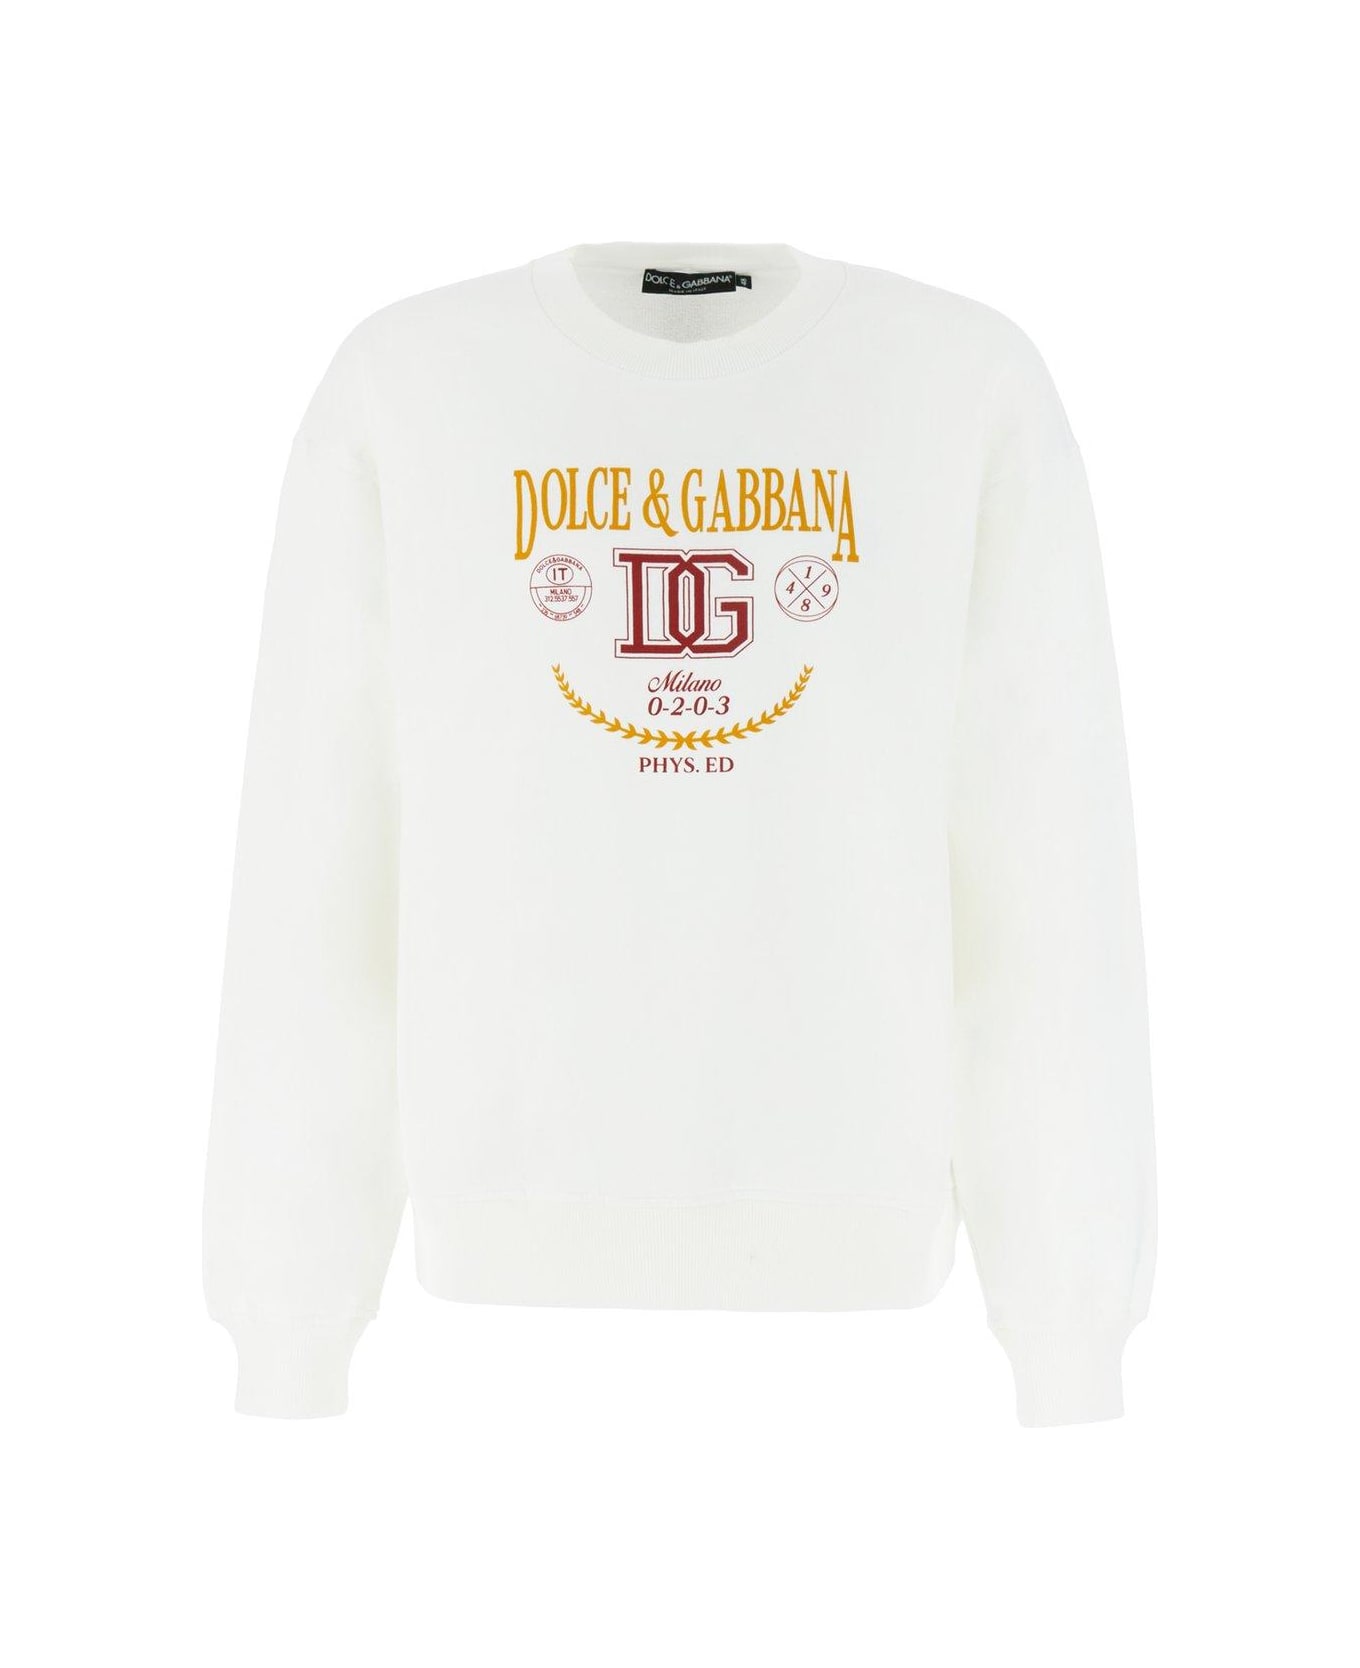 Dolce & Gabbana Dg Printed Crewneck Sweatshirt フリース